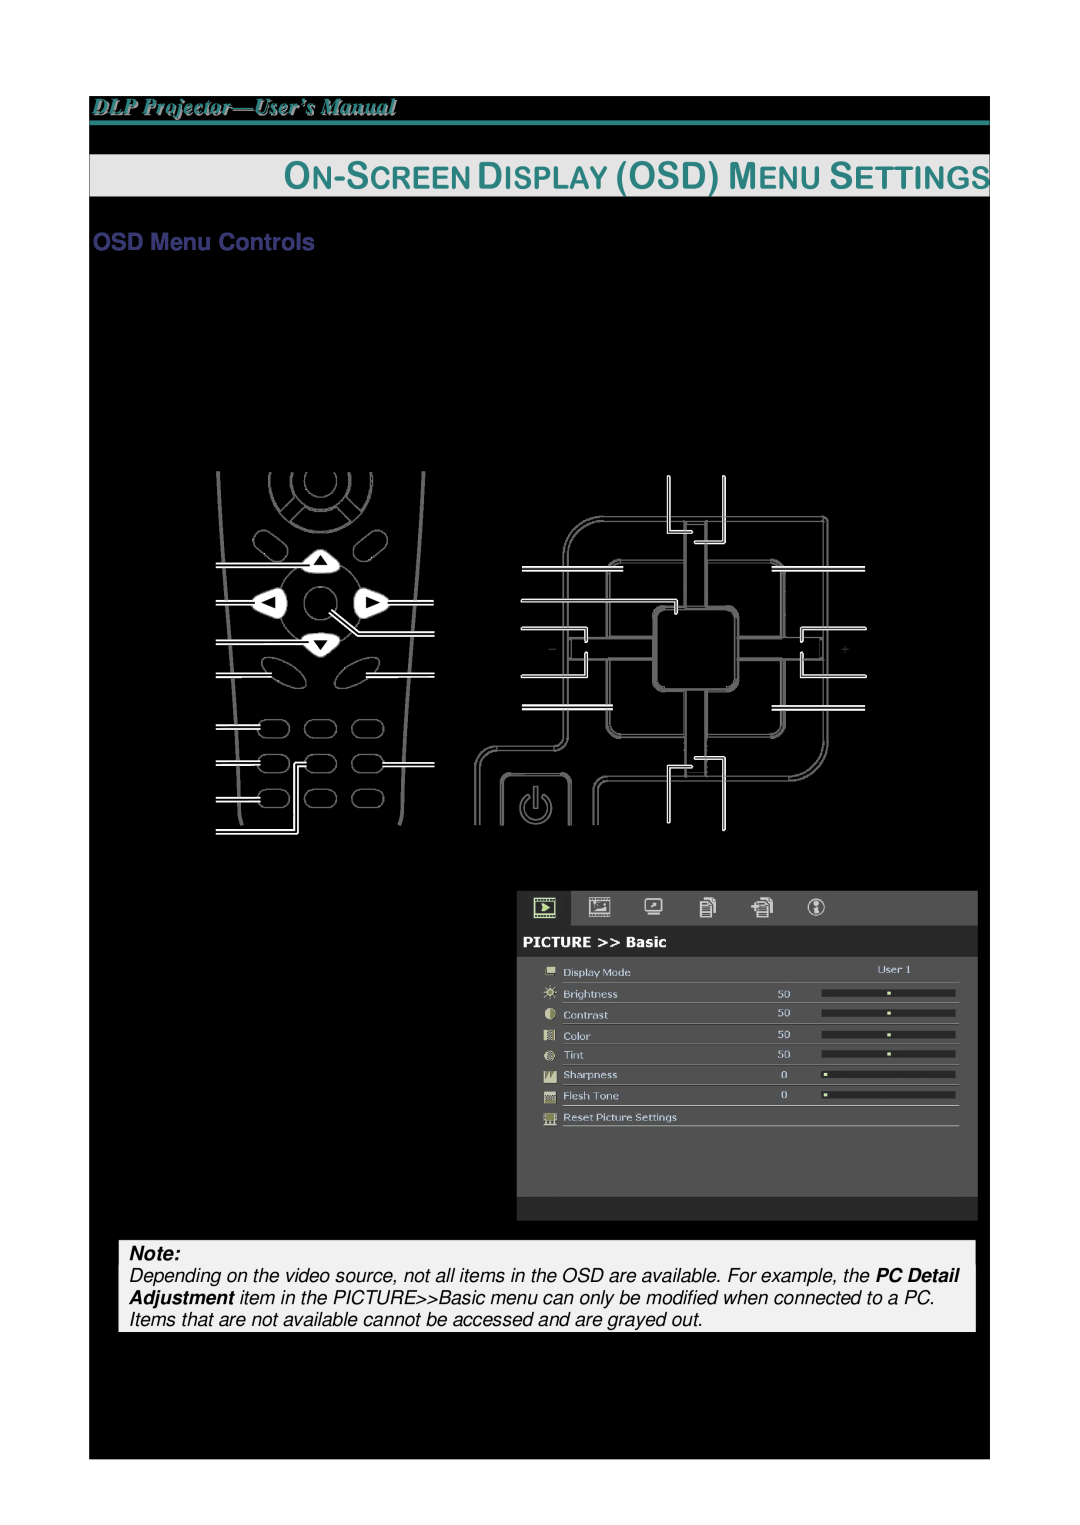 Knoll Systems HDO2200 user manual On-Screen Display Osd Menu Settings, Navigating the OSD, OSD Menu Controls 